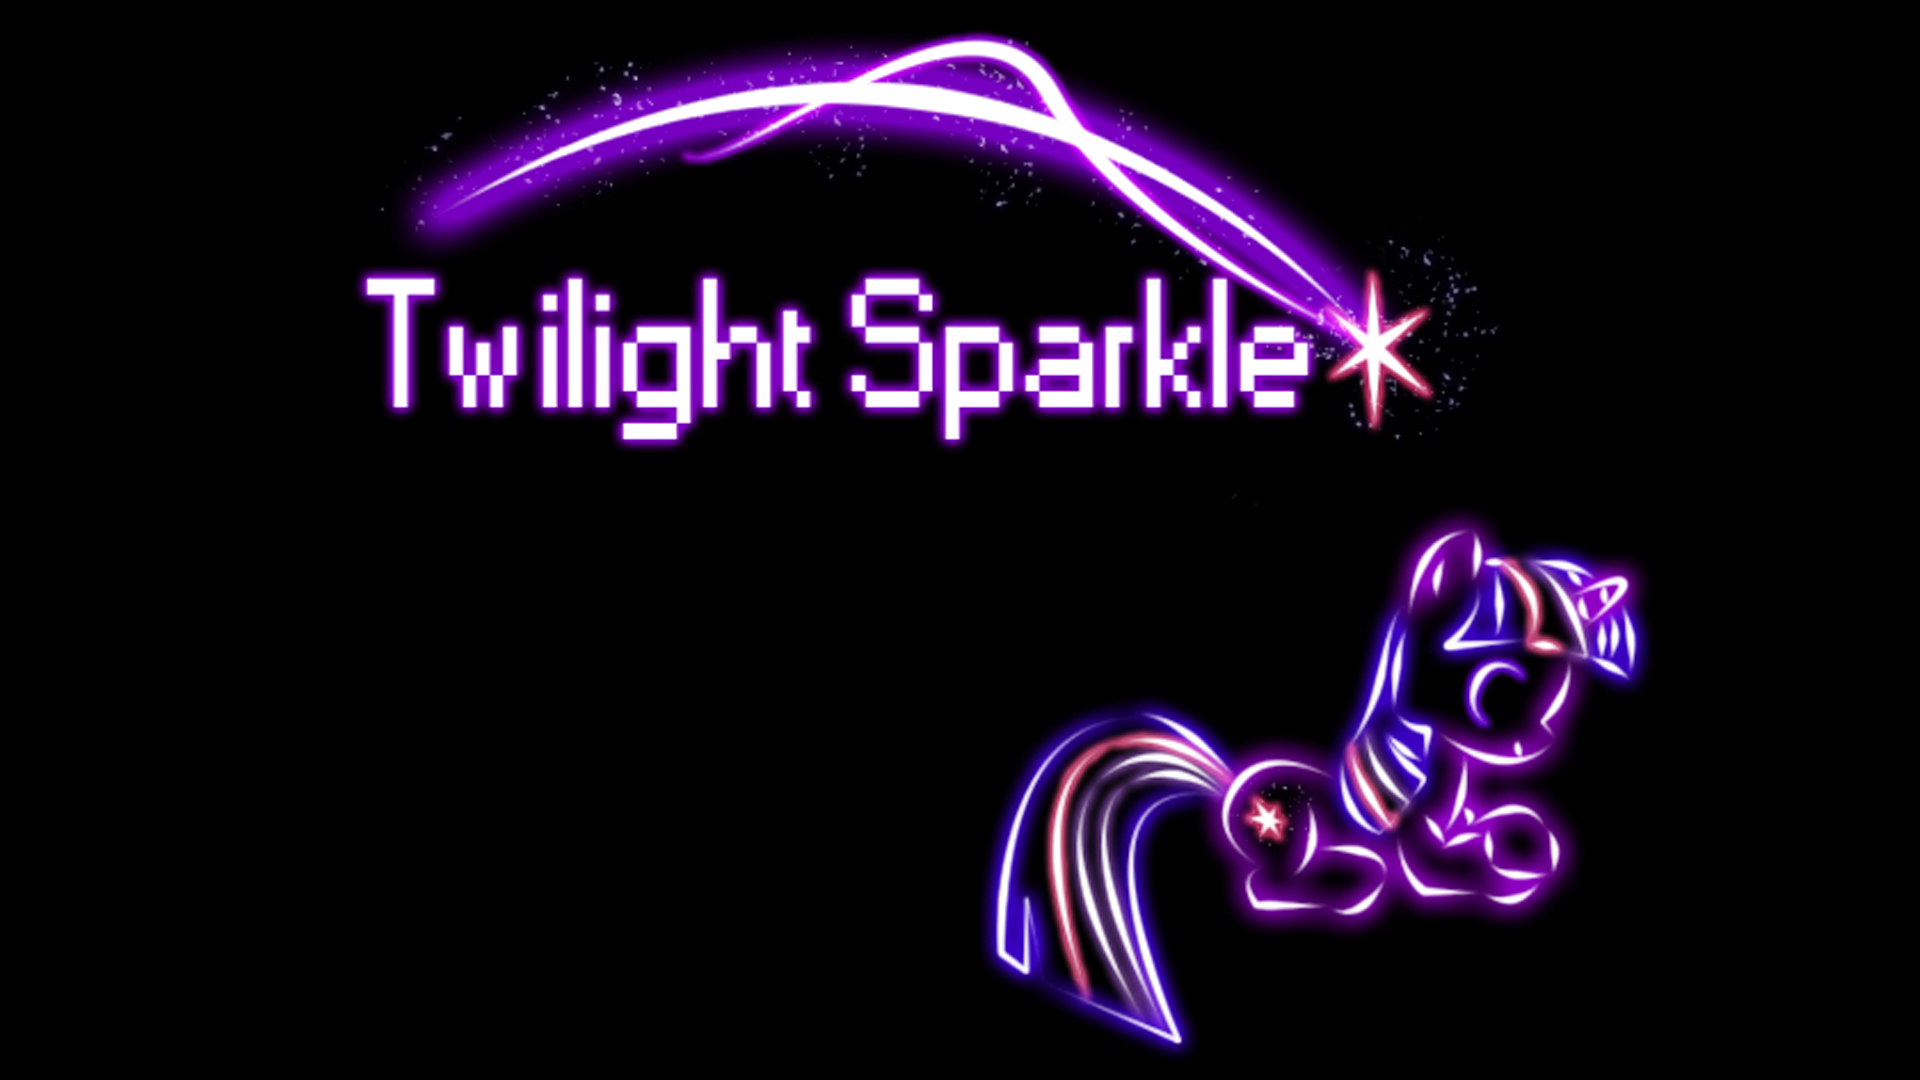 Twilight Sparkle Wallpaper 2.0 by buckheadgar